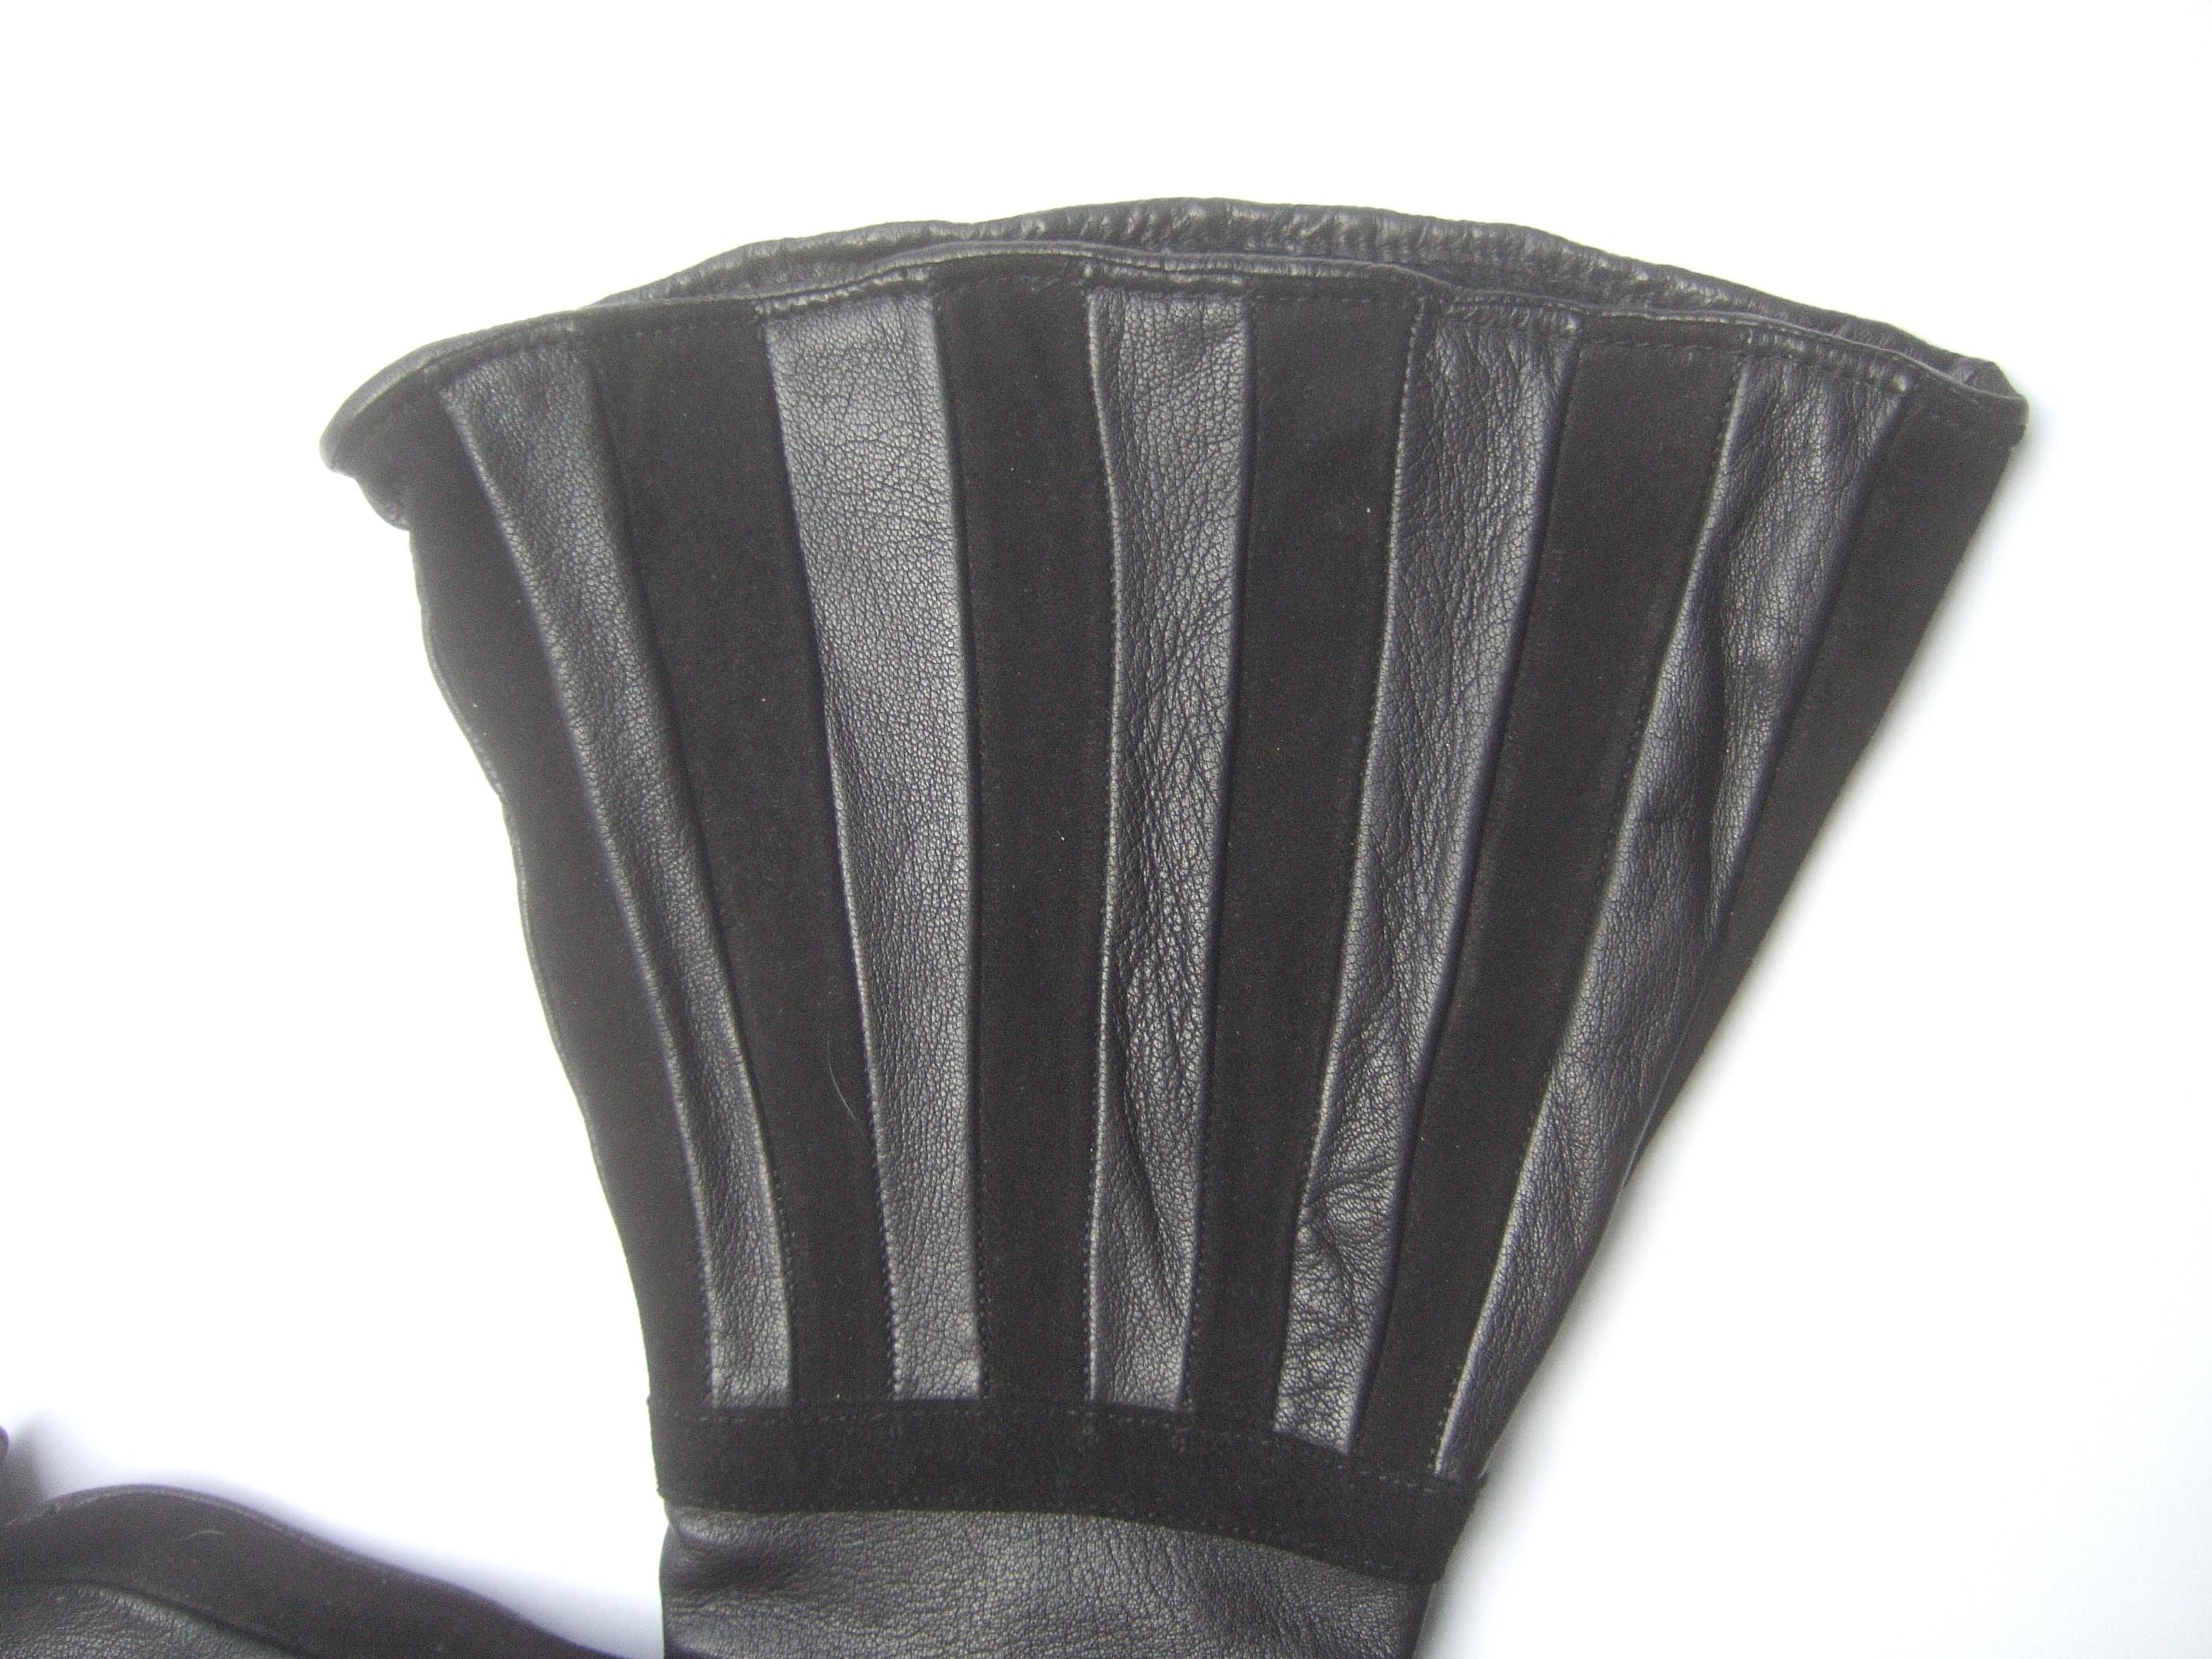 Saks Fifth Avenue Chic Avant-Garde Black Leather & Suede Trim Gloves c 1980s 9